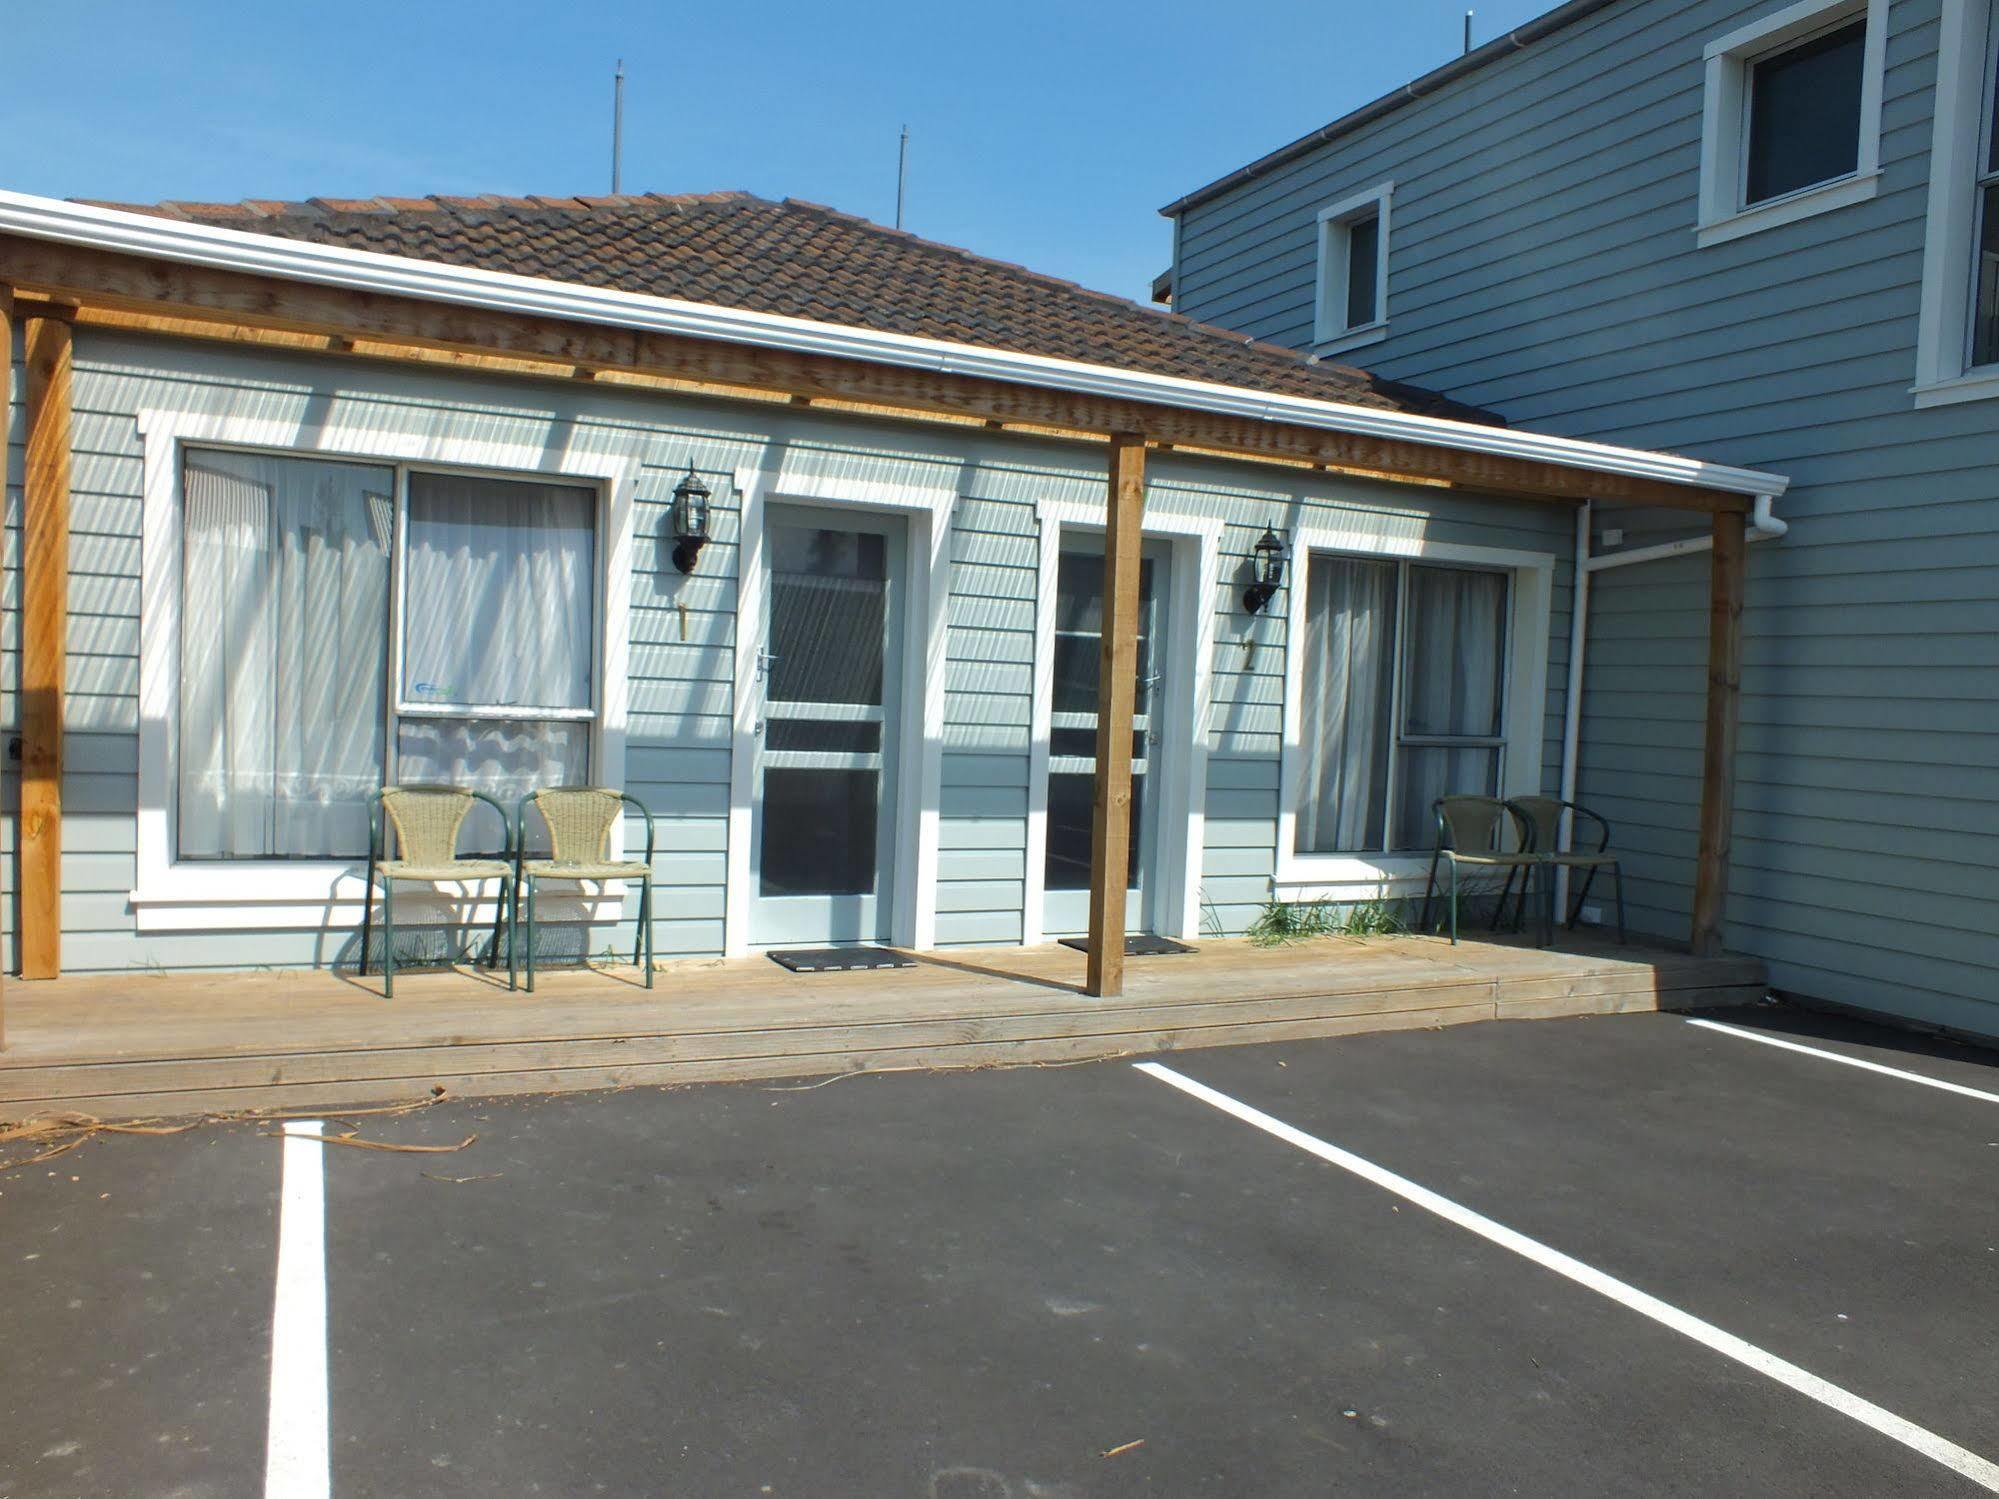 Cranford Cottages&Motel Christchurch Exteriör bild